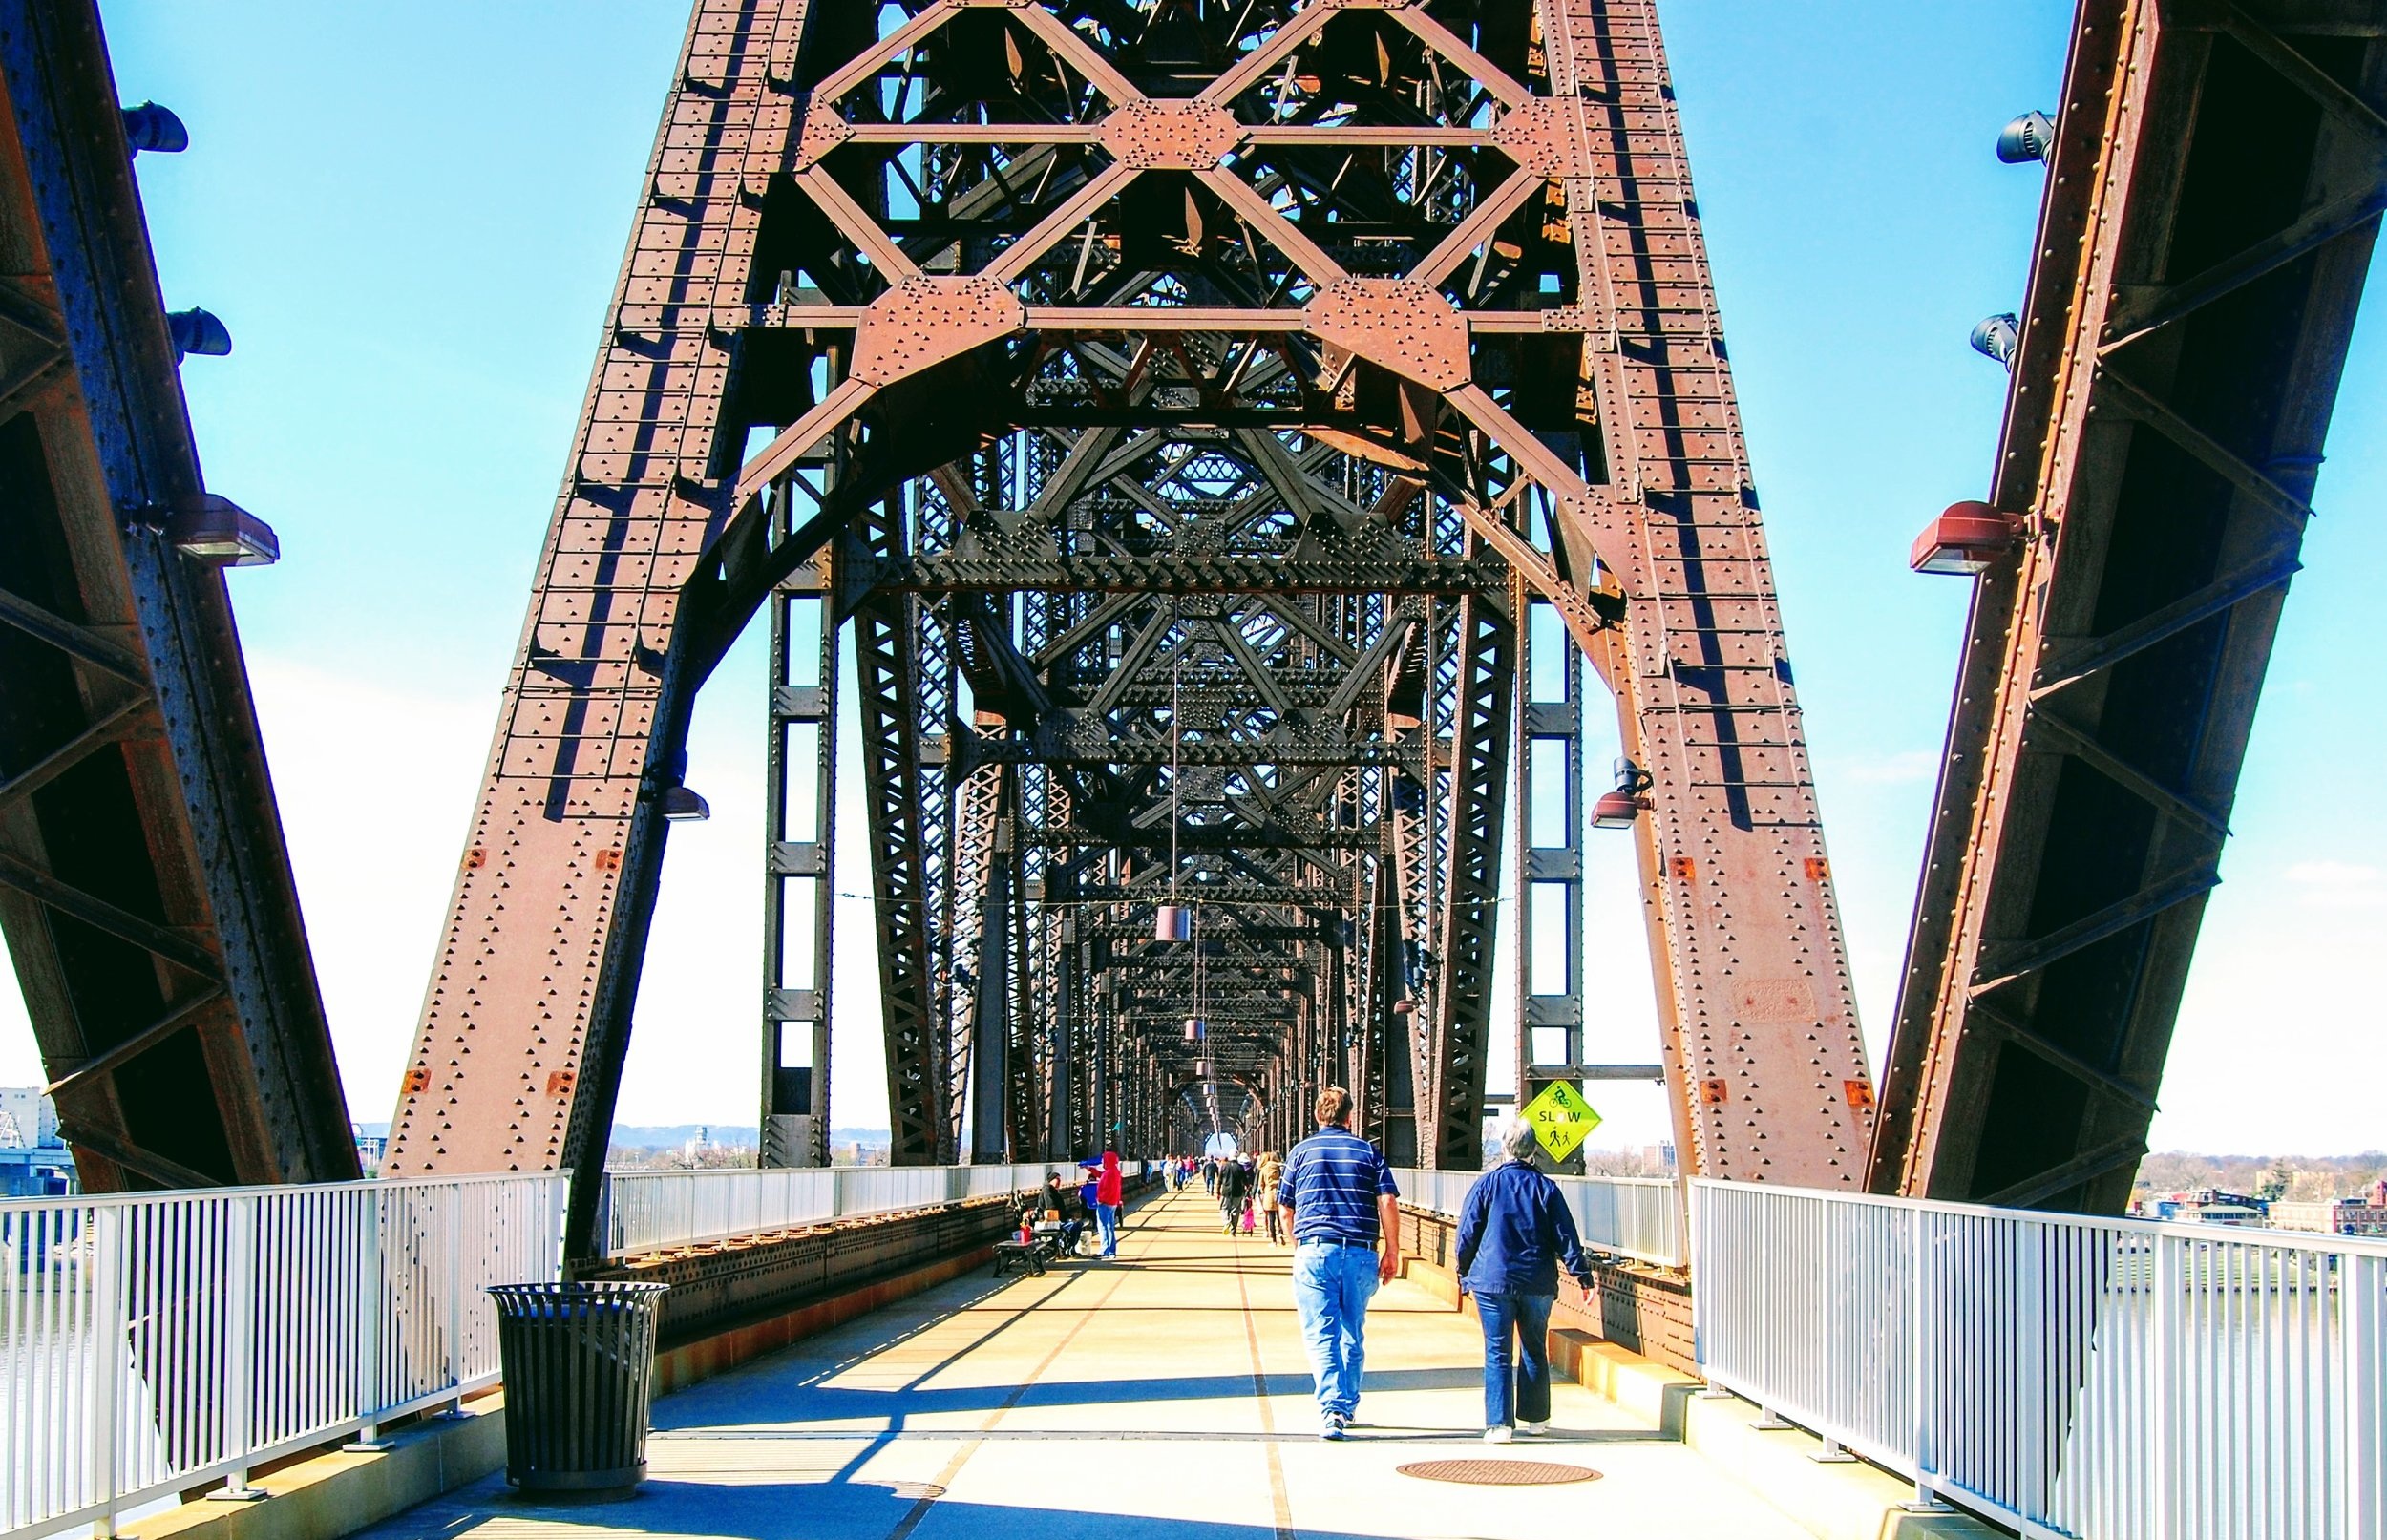 Walking across the Big Four Bridge